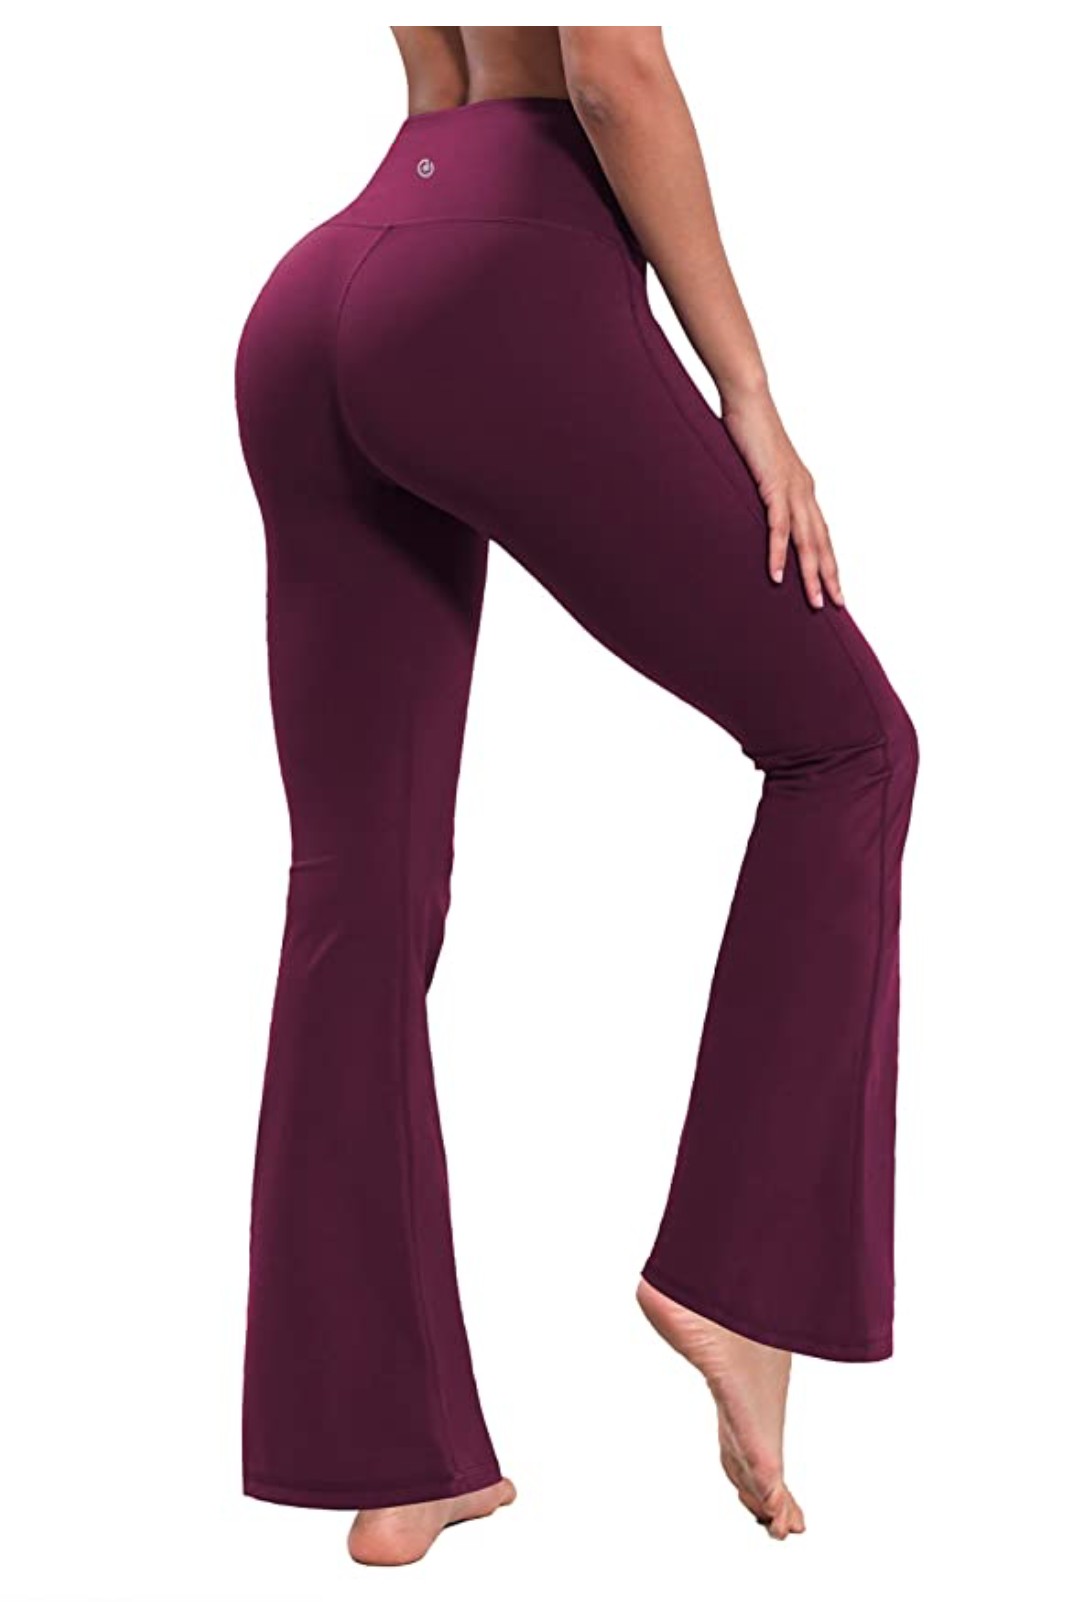 Tall Women bootcut yoga pants